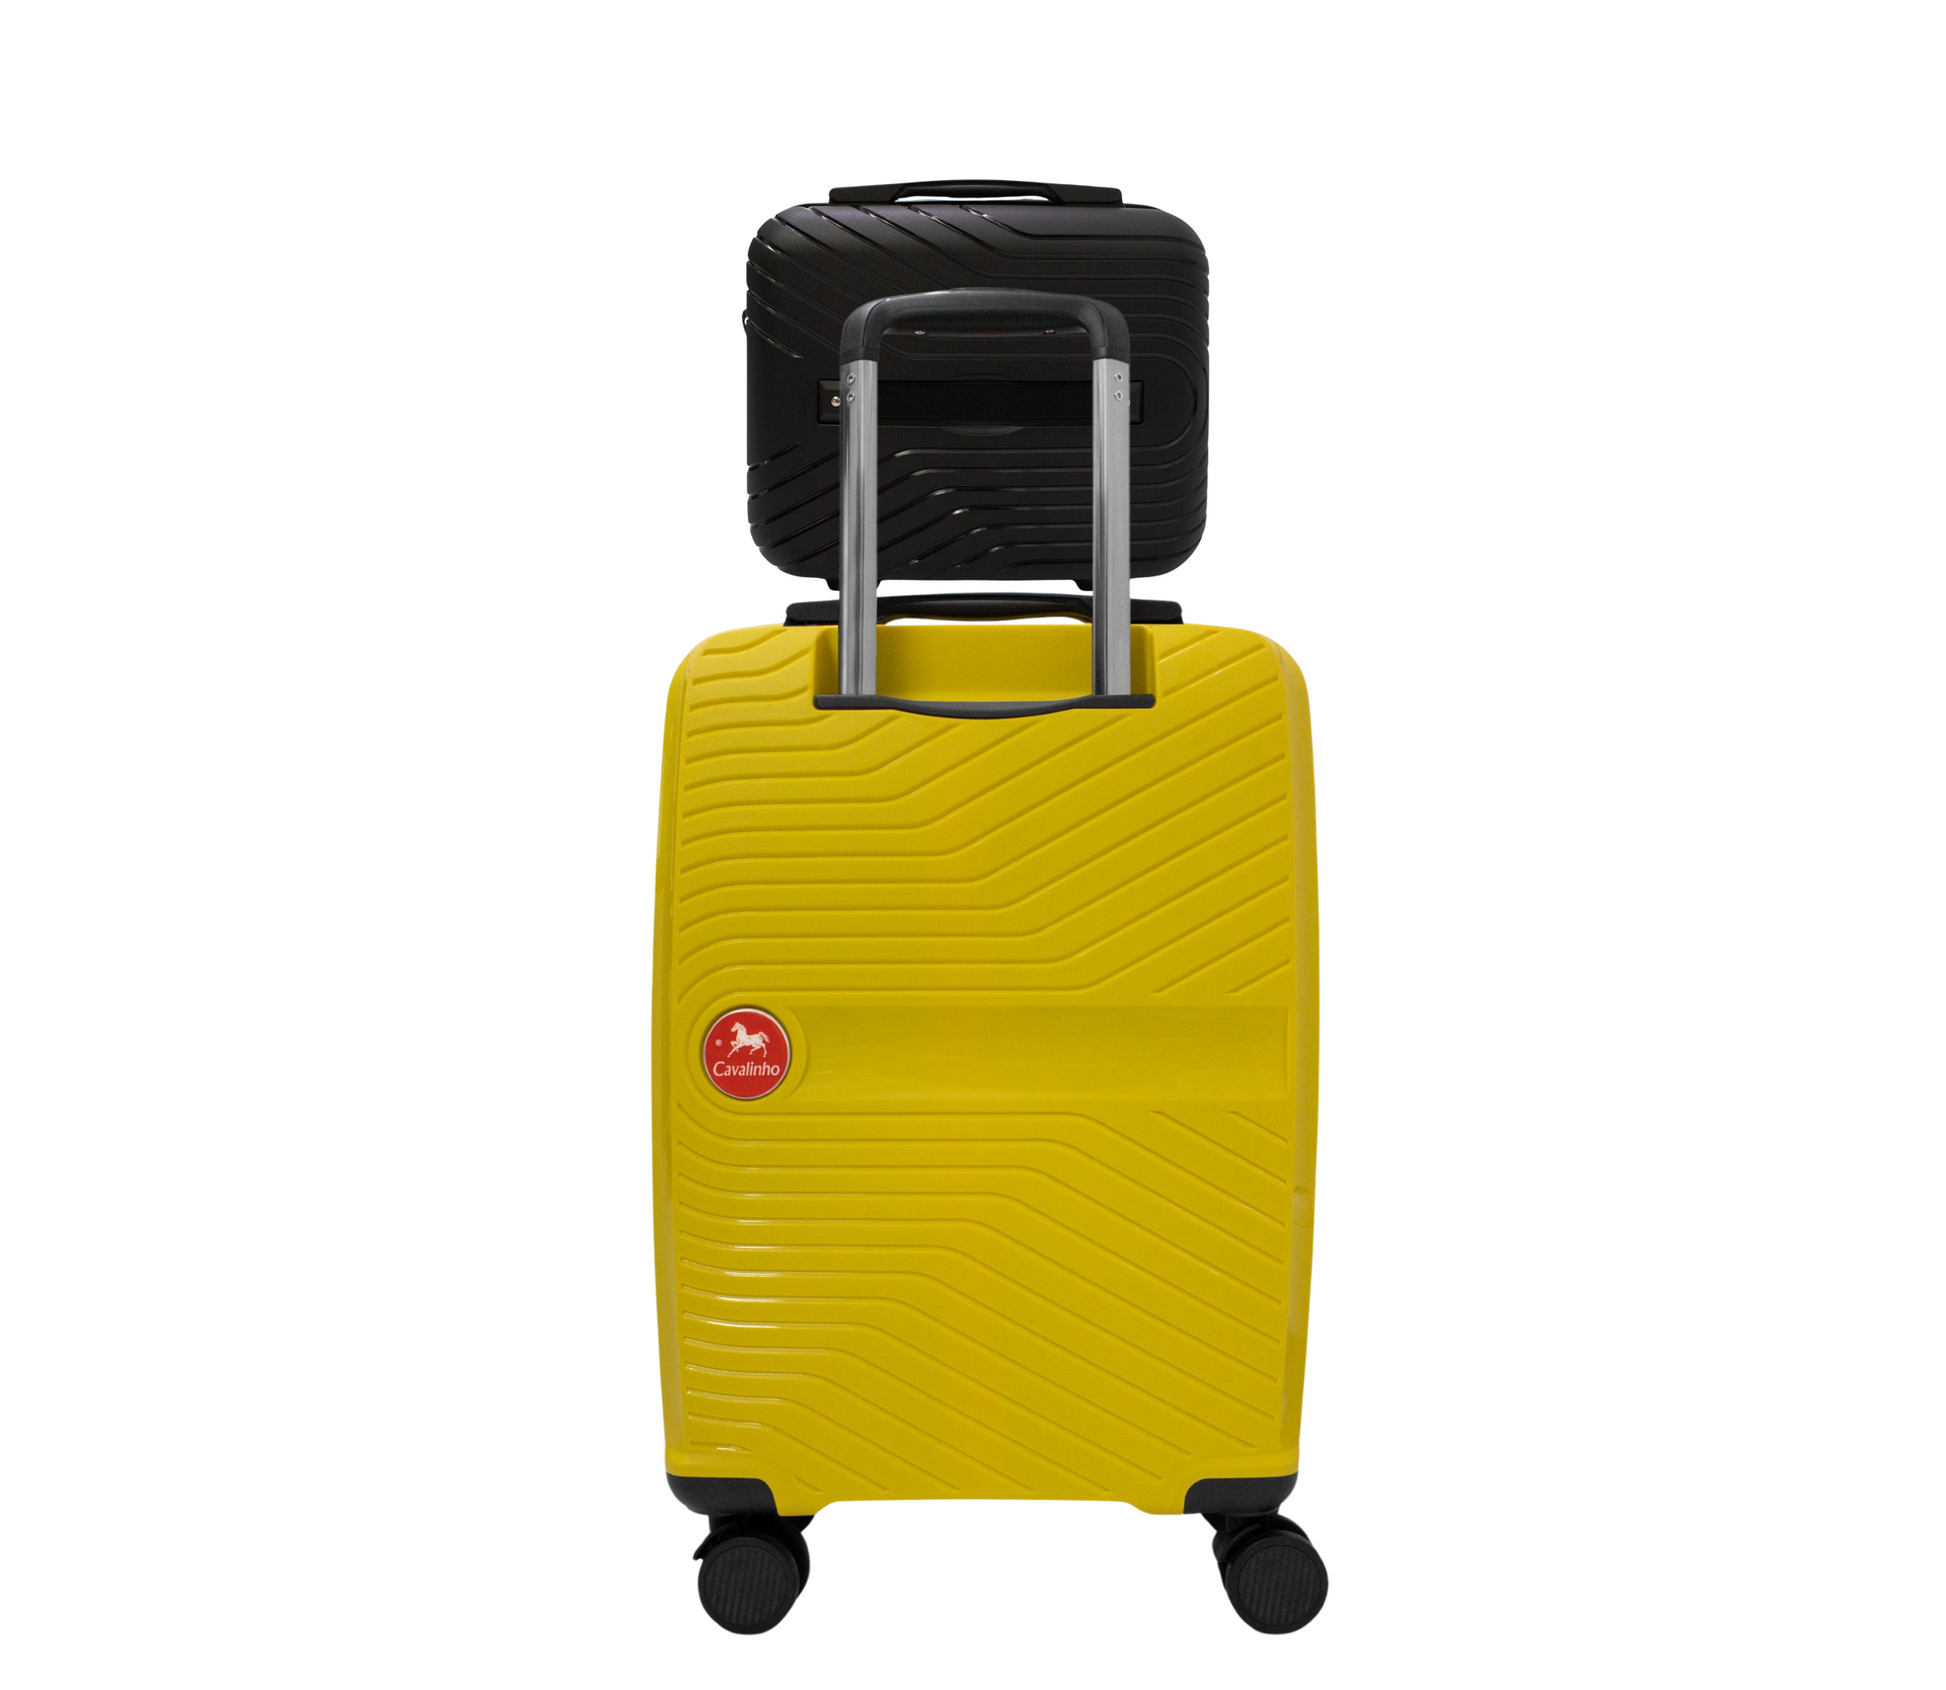 Cavalinho Colorful 2 Piece Luggage Set (15" & 19") - Black Yellow - 68020004.0108.S1519._2